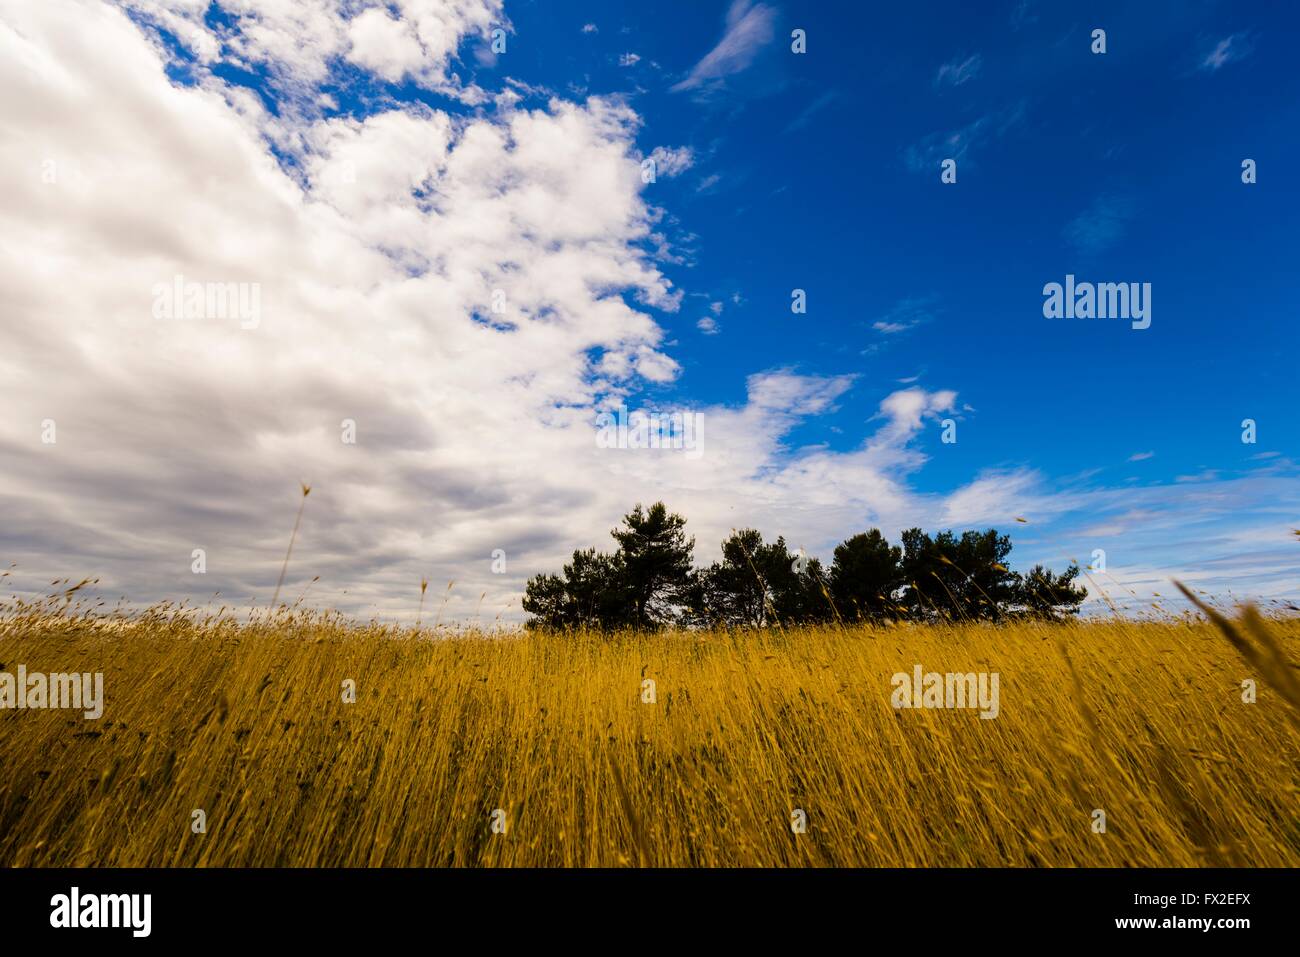 Cloudy landscape scenic scenery Stock Photo